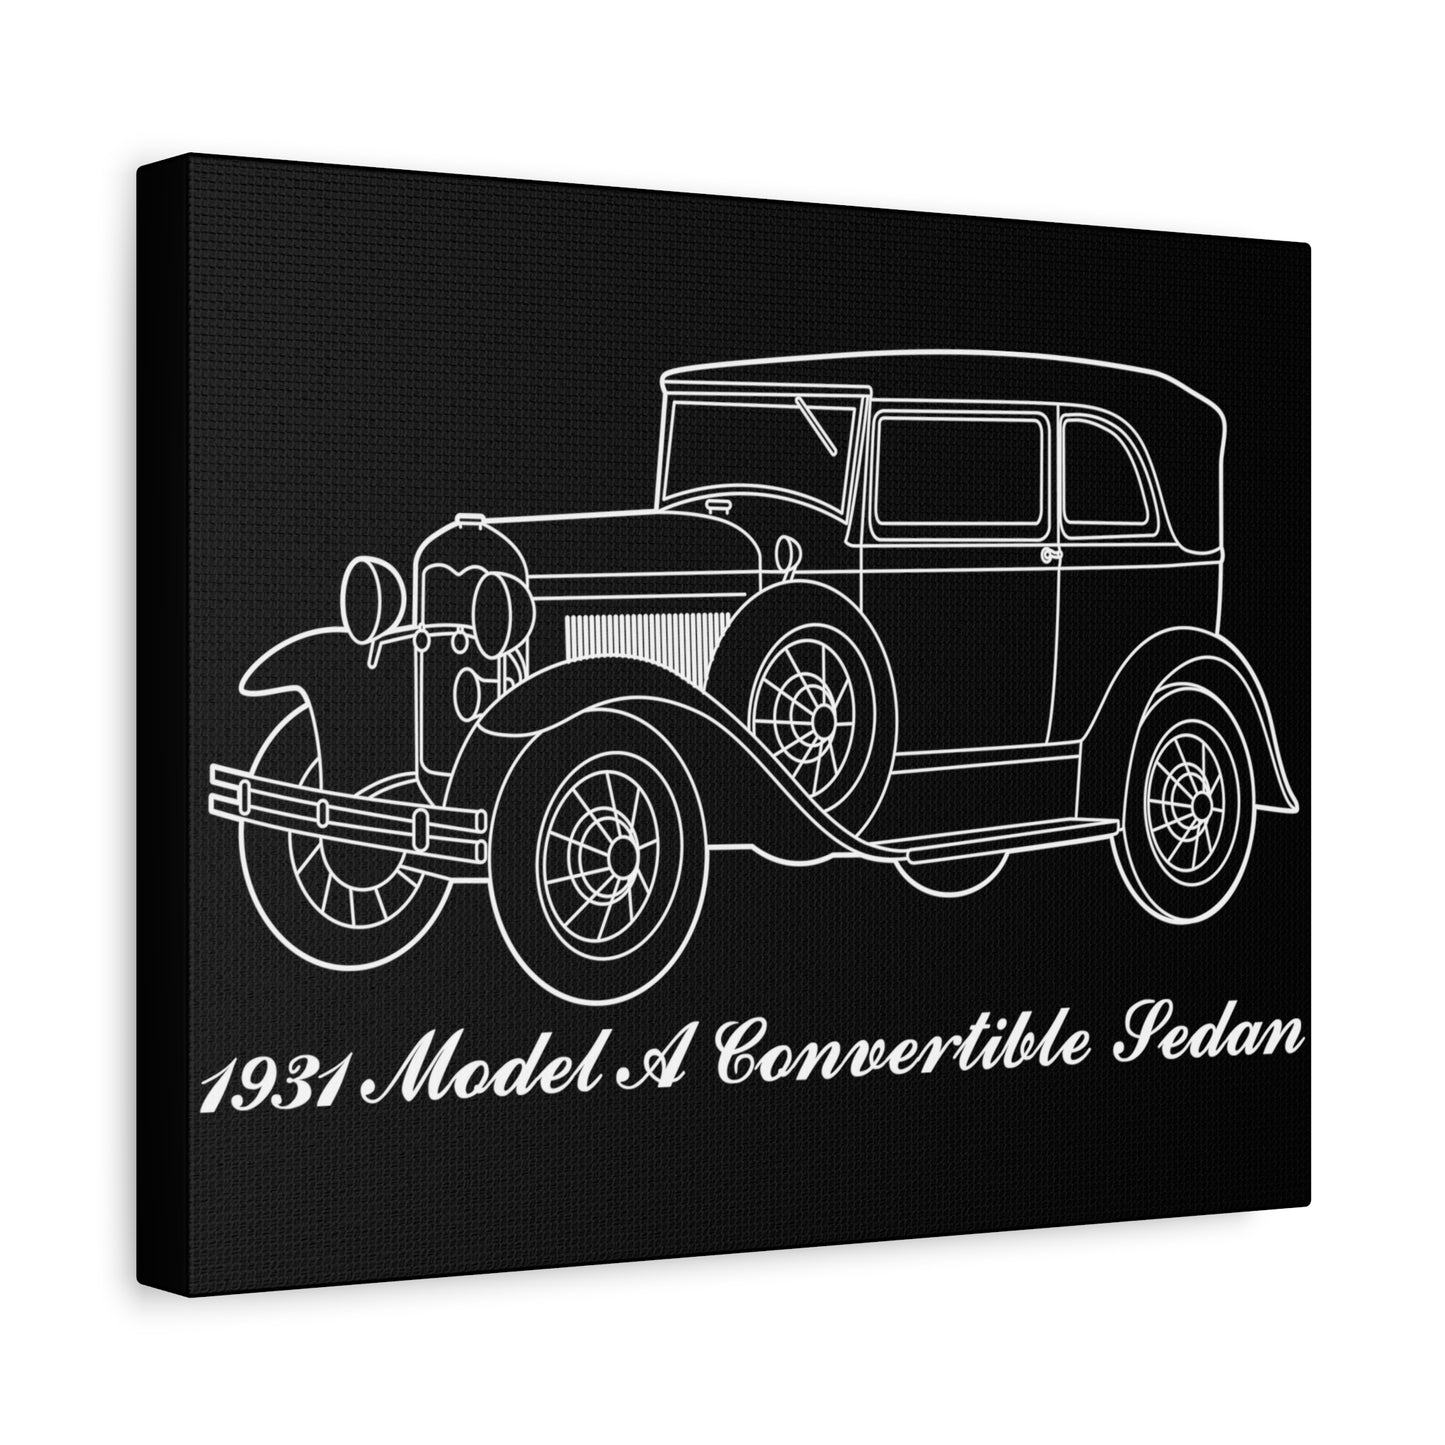 1931 Convertible Sedan Black Canvas Wall Art